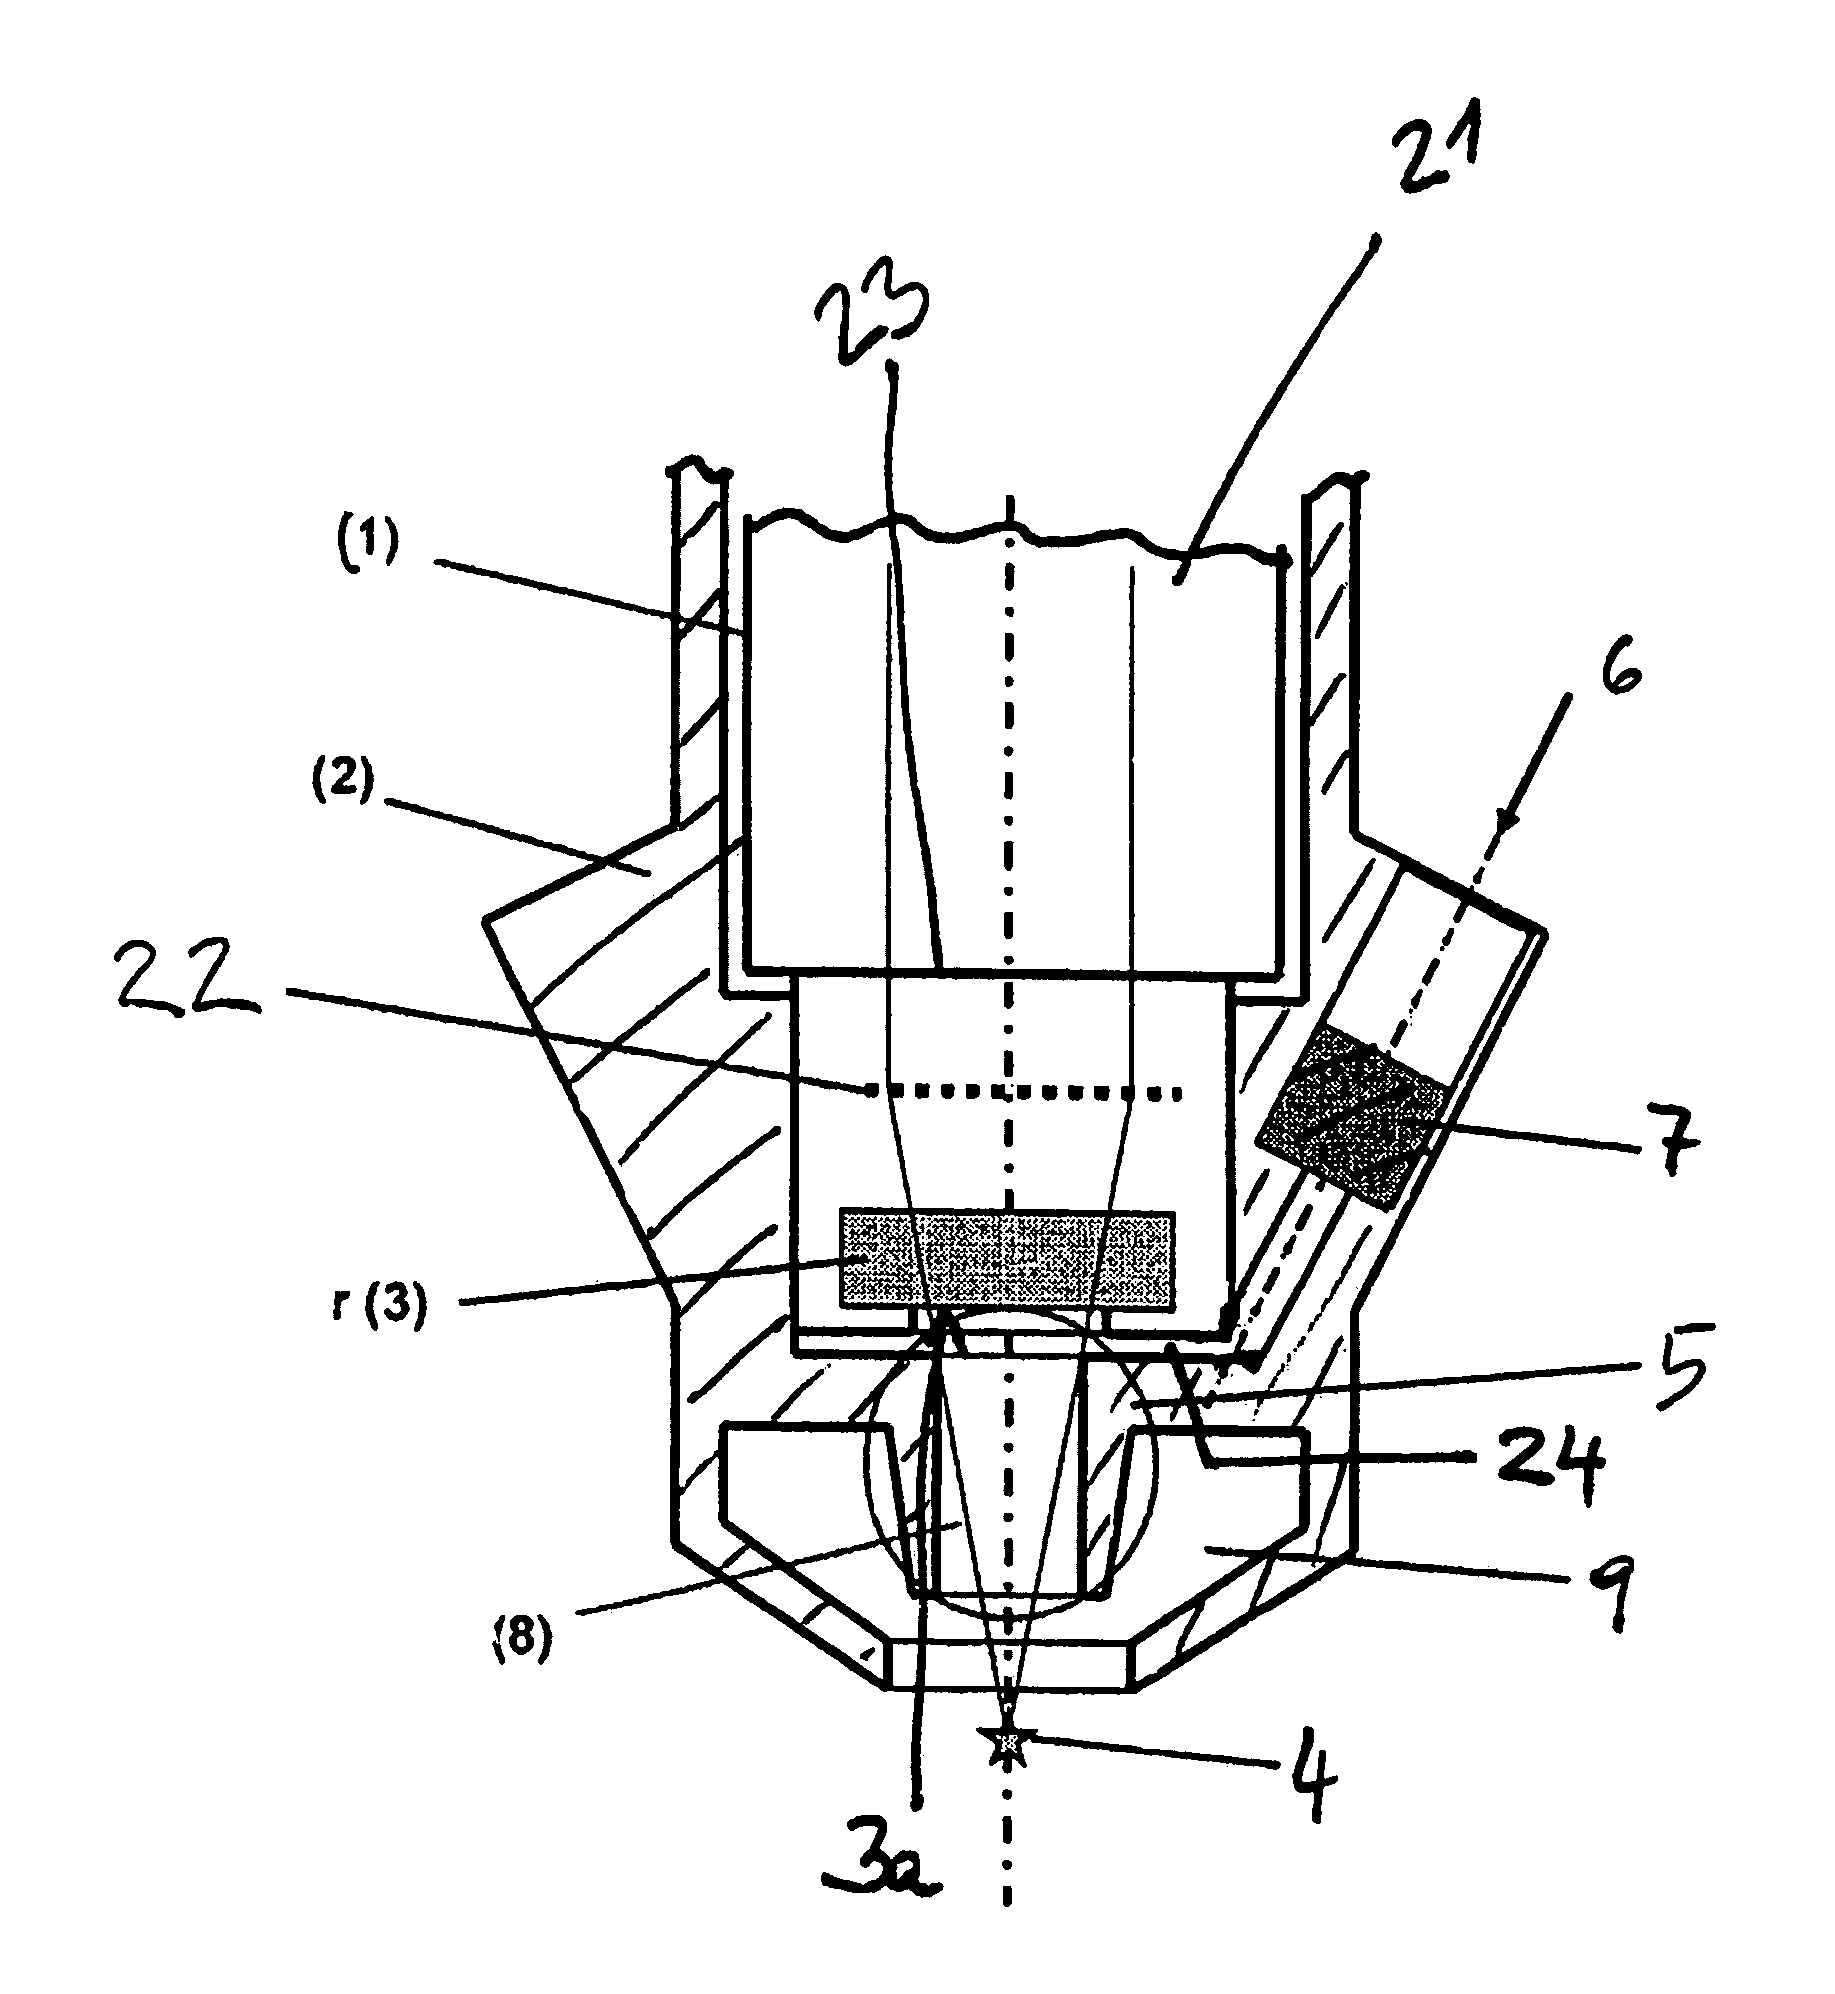 Laser ignition apparatus